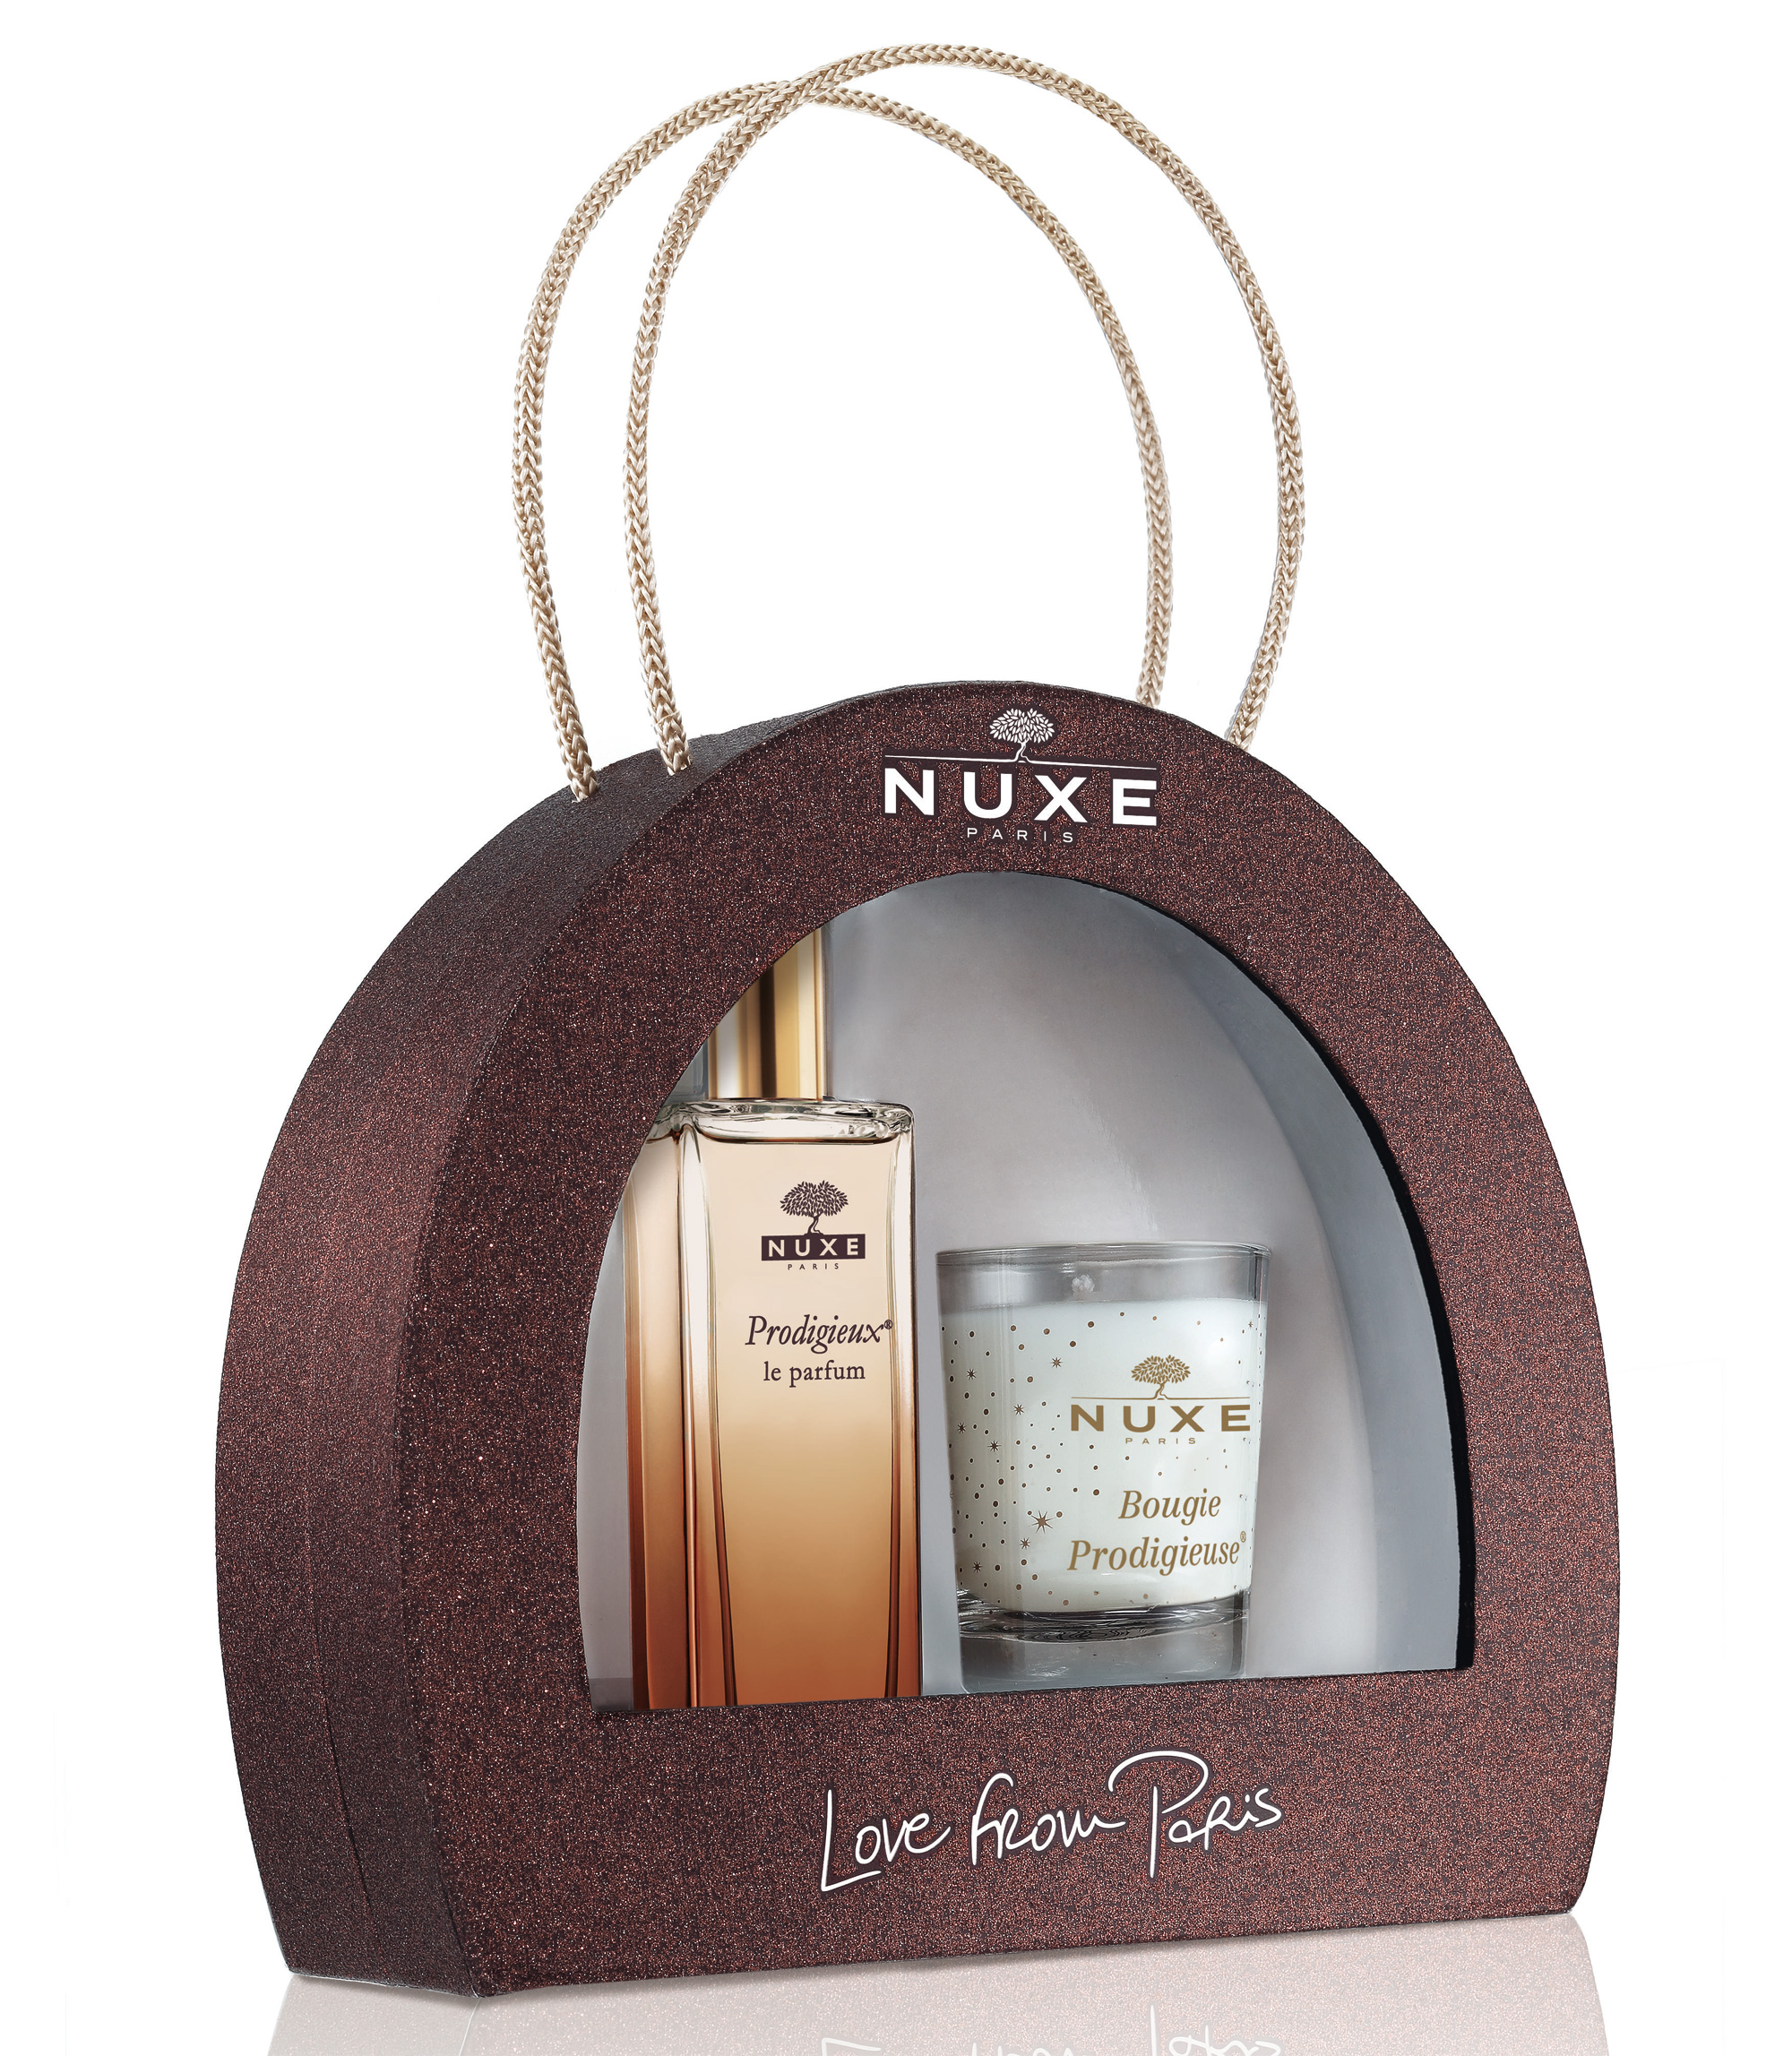 comprar-nuxe-cofre-edicion-limitada-2014-love-from-paris-nuxe-prodigieux-le-parfum-regalo-vela-bougie-prodigieuse-farmacia-velazquez-70